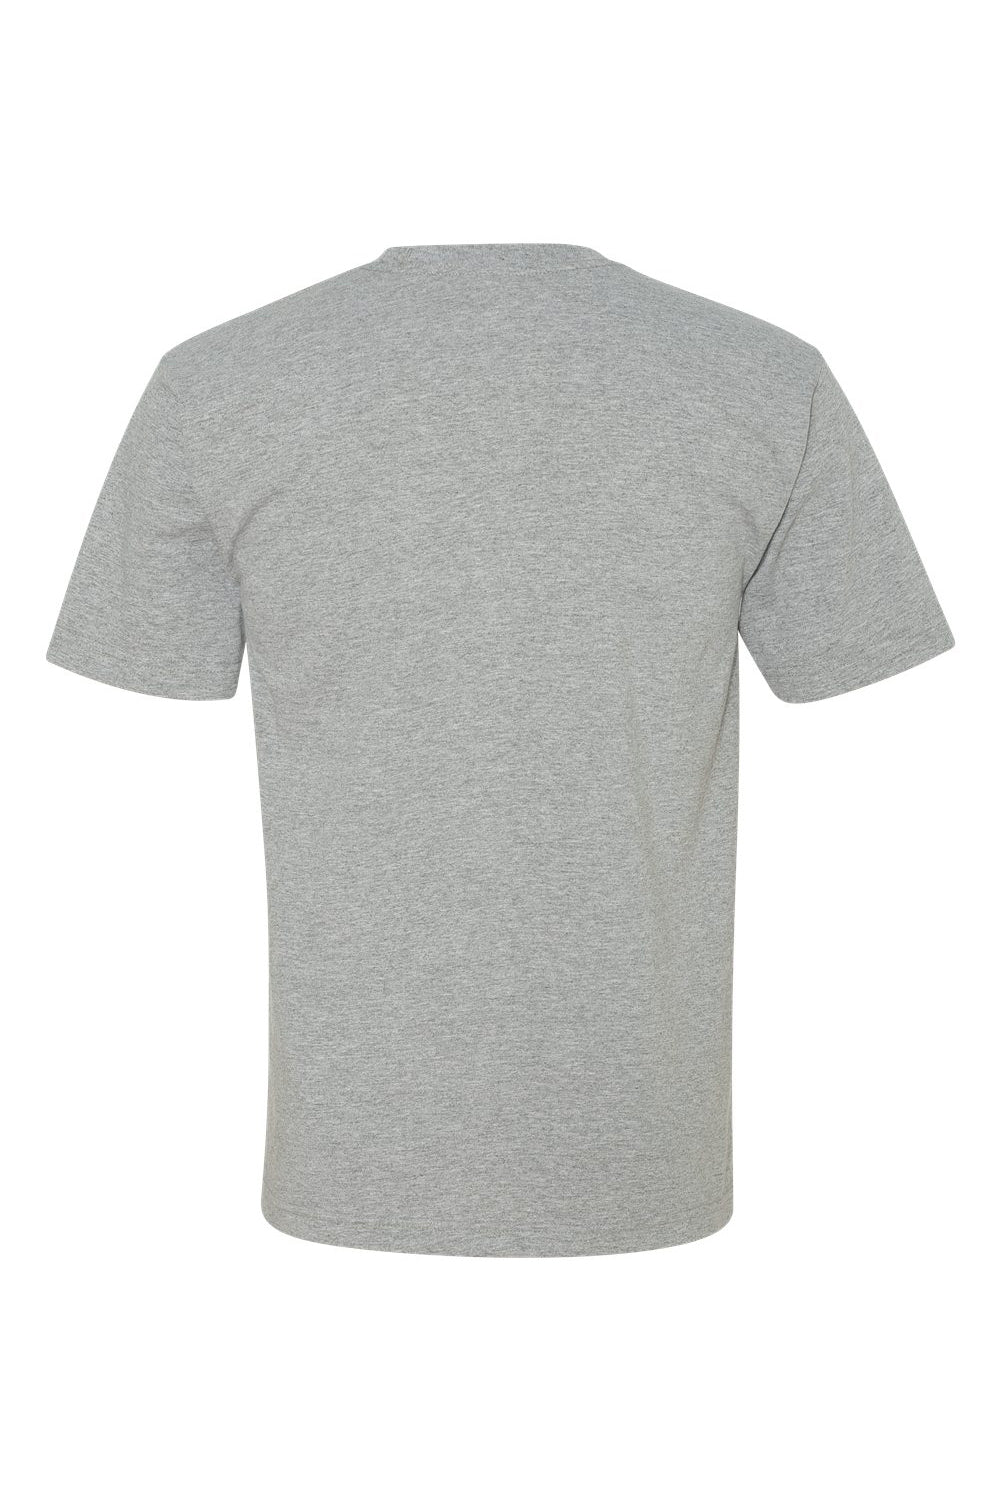 Bayside BA5070 Mens USA Made Short Sleeve Crewneck T-Shirt w/ Pocket Dark Ash Grey Flat Back